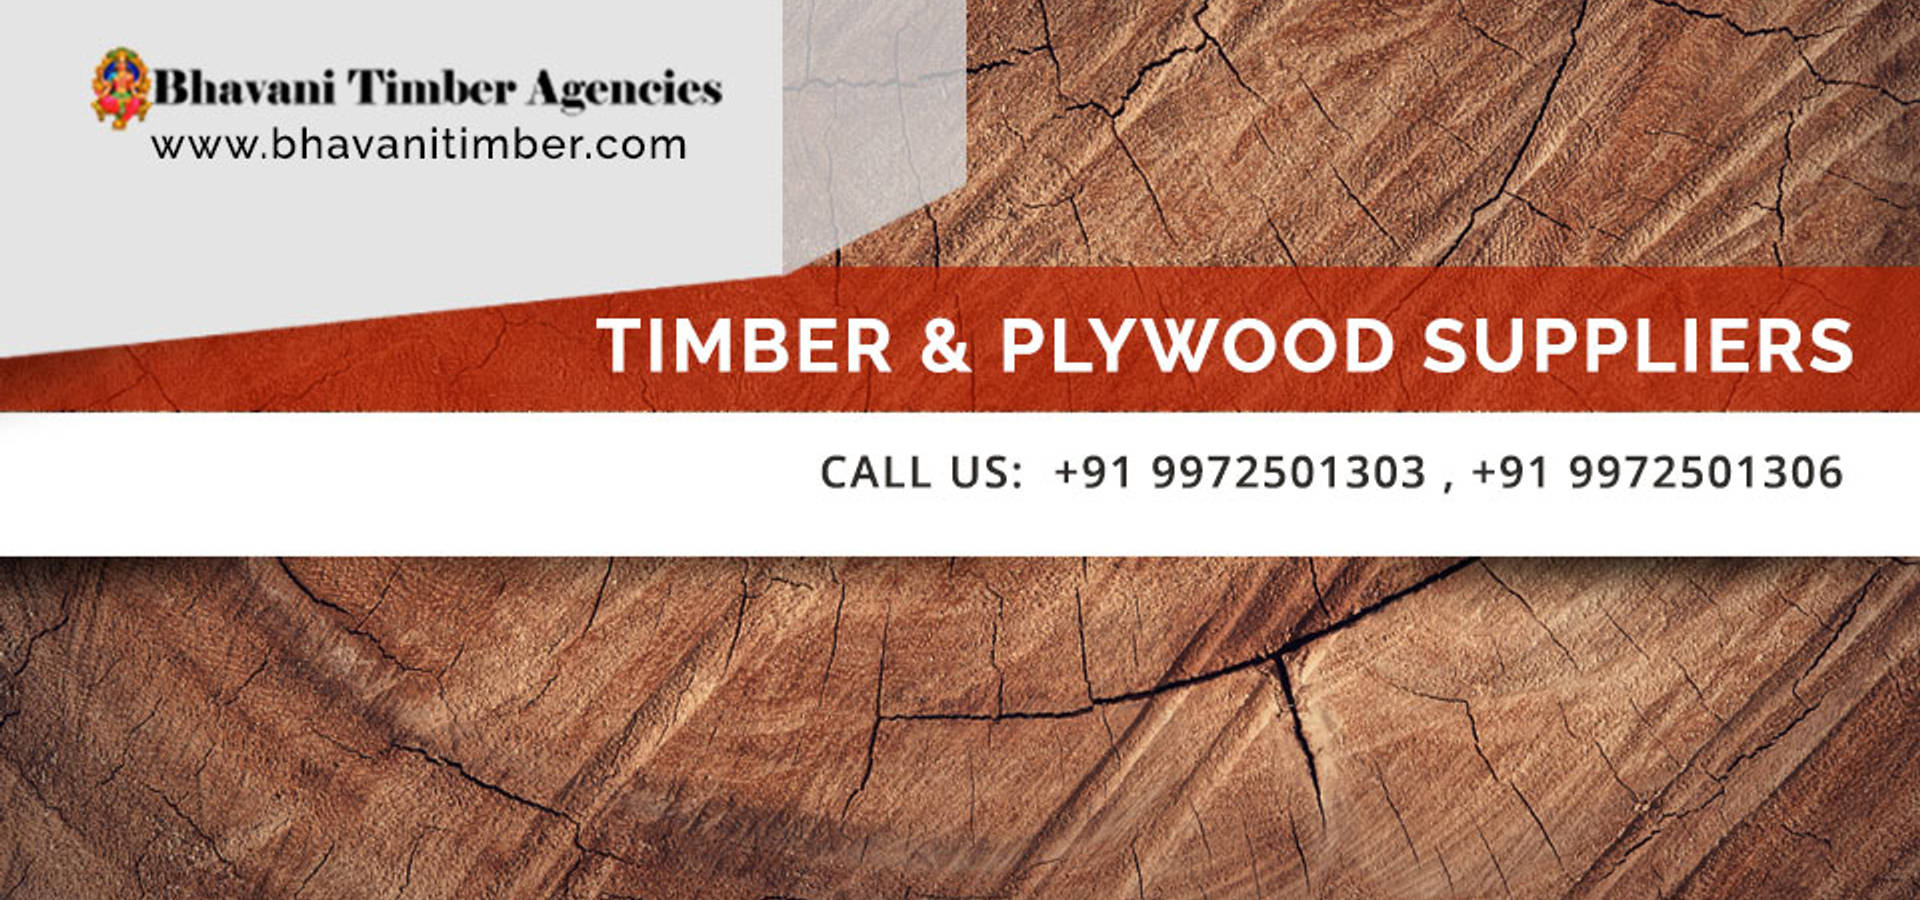 Bhavani Timber Agencies